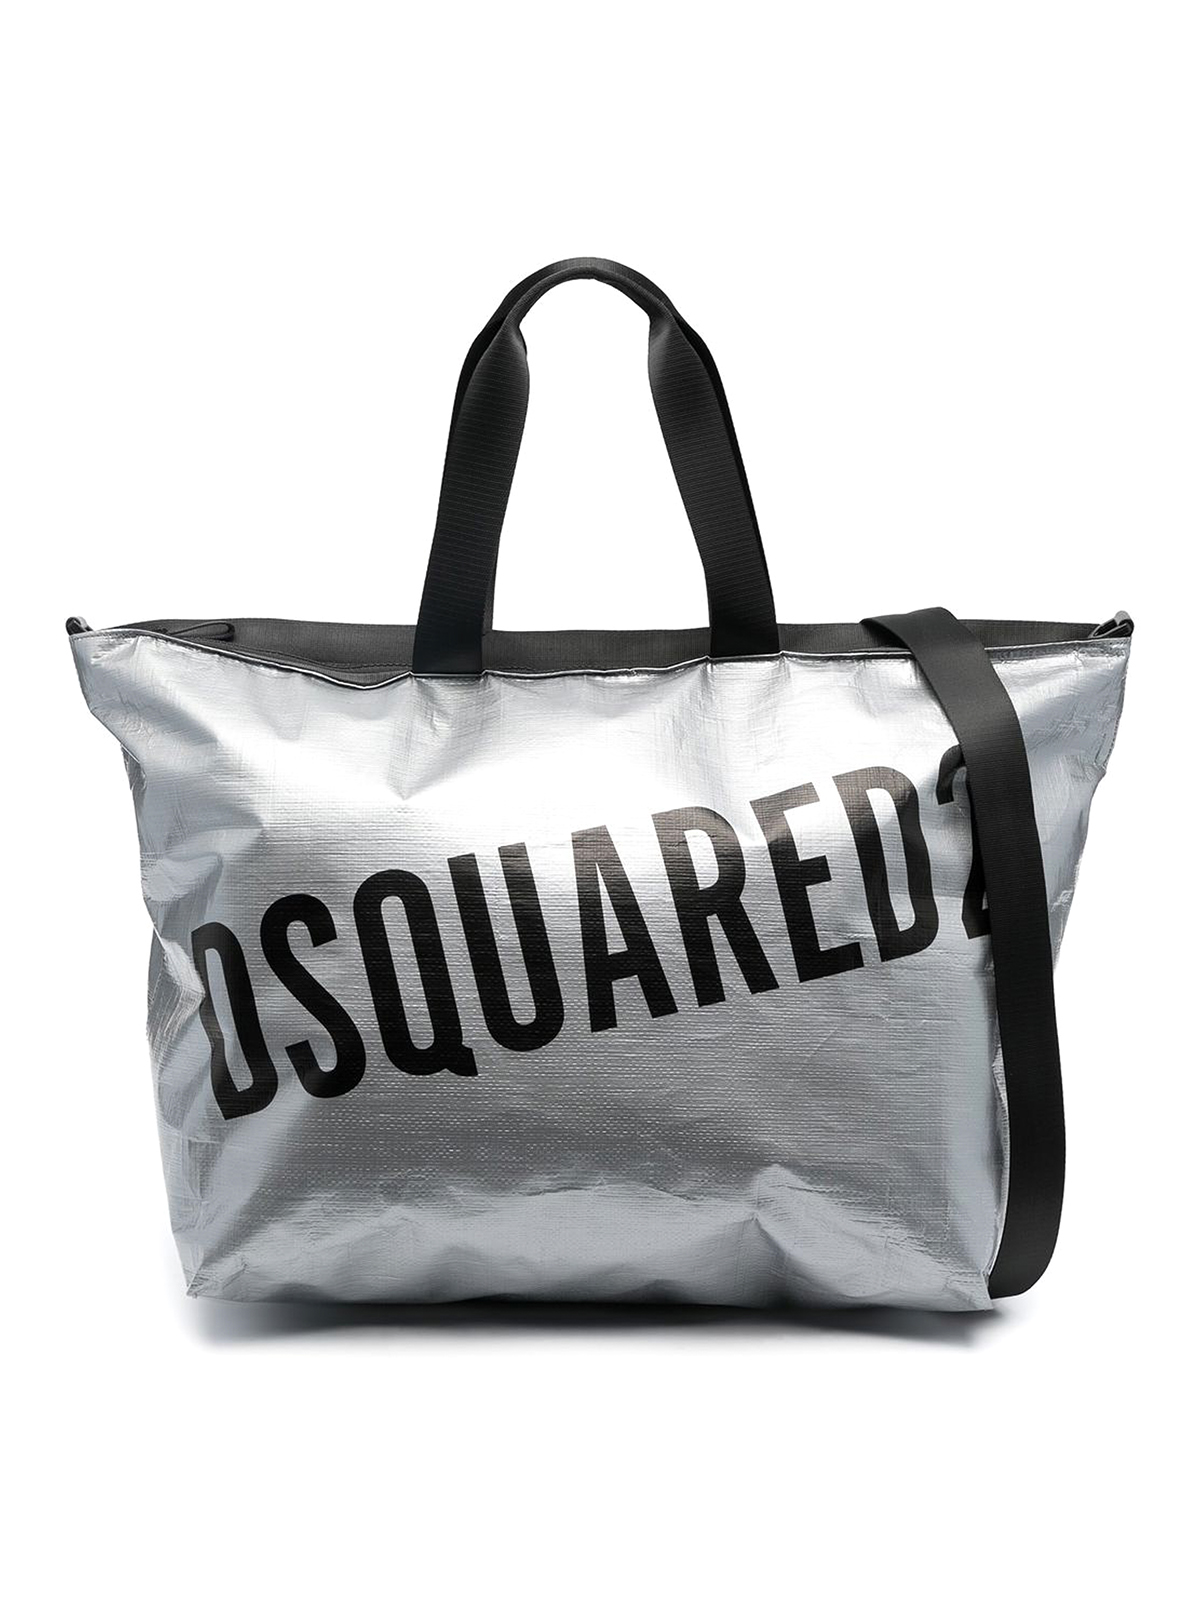 Dsquared2 Logo Shopping Bag